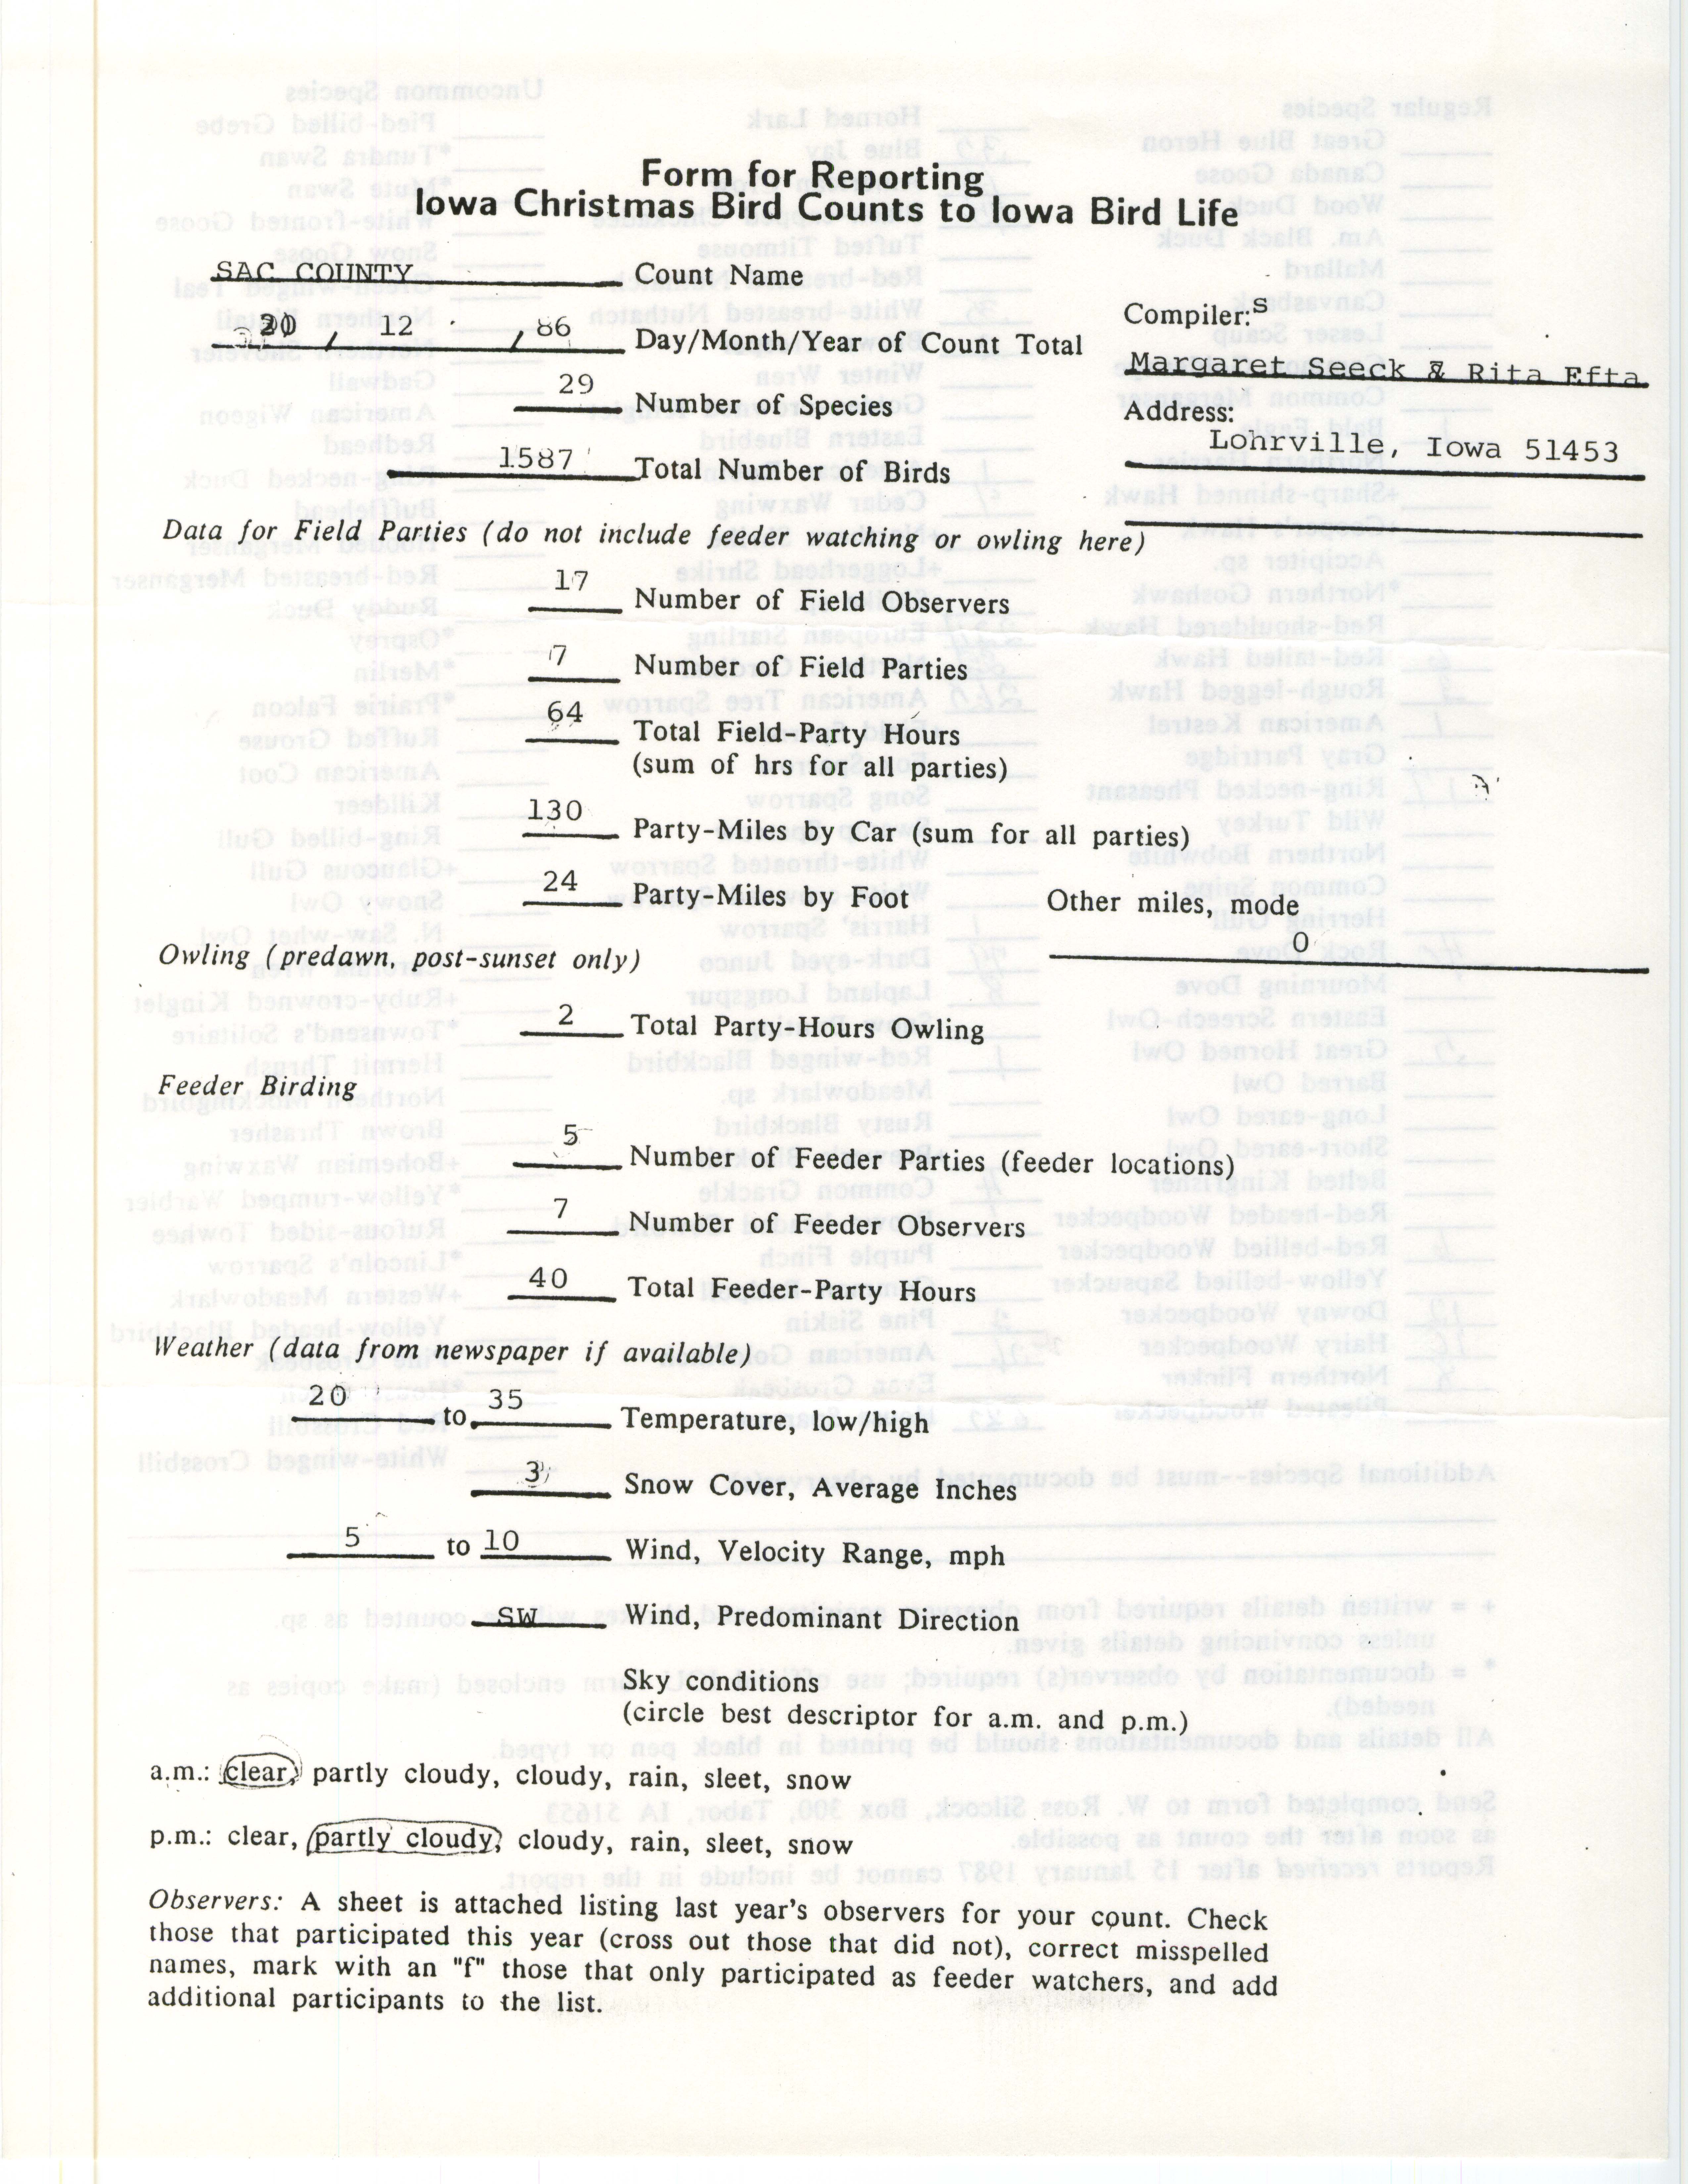 Form for reporting Iowa Christmas bird counts to Iowa Bird Life, Margaret Seeck and Rita E. Efta, December 20, 1986